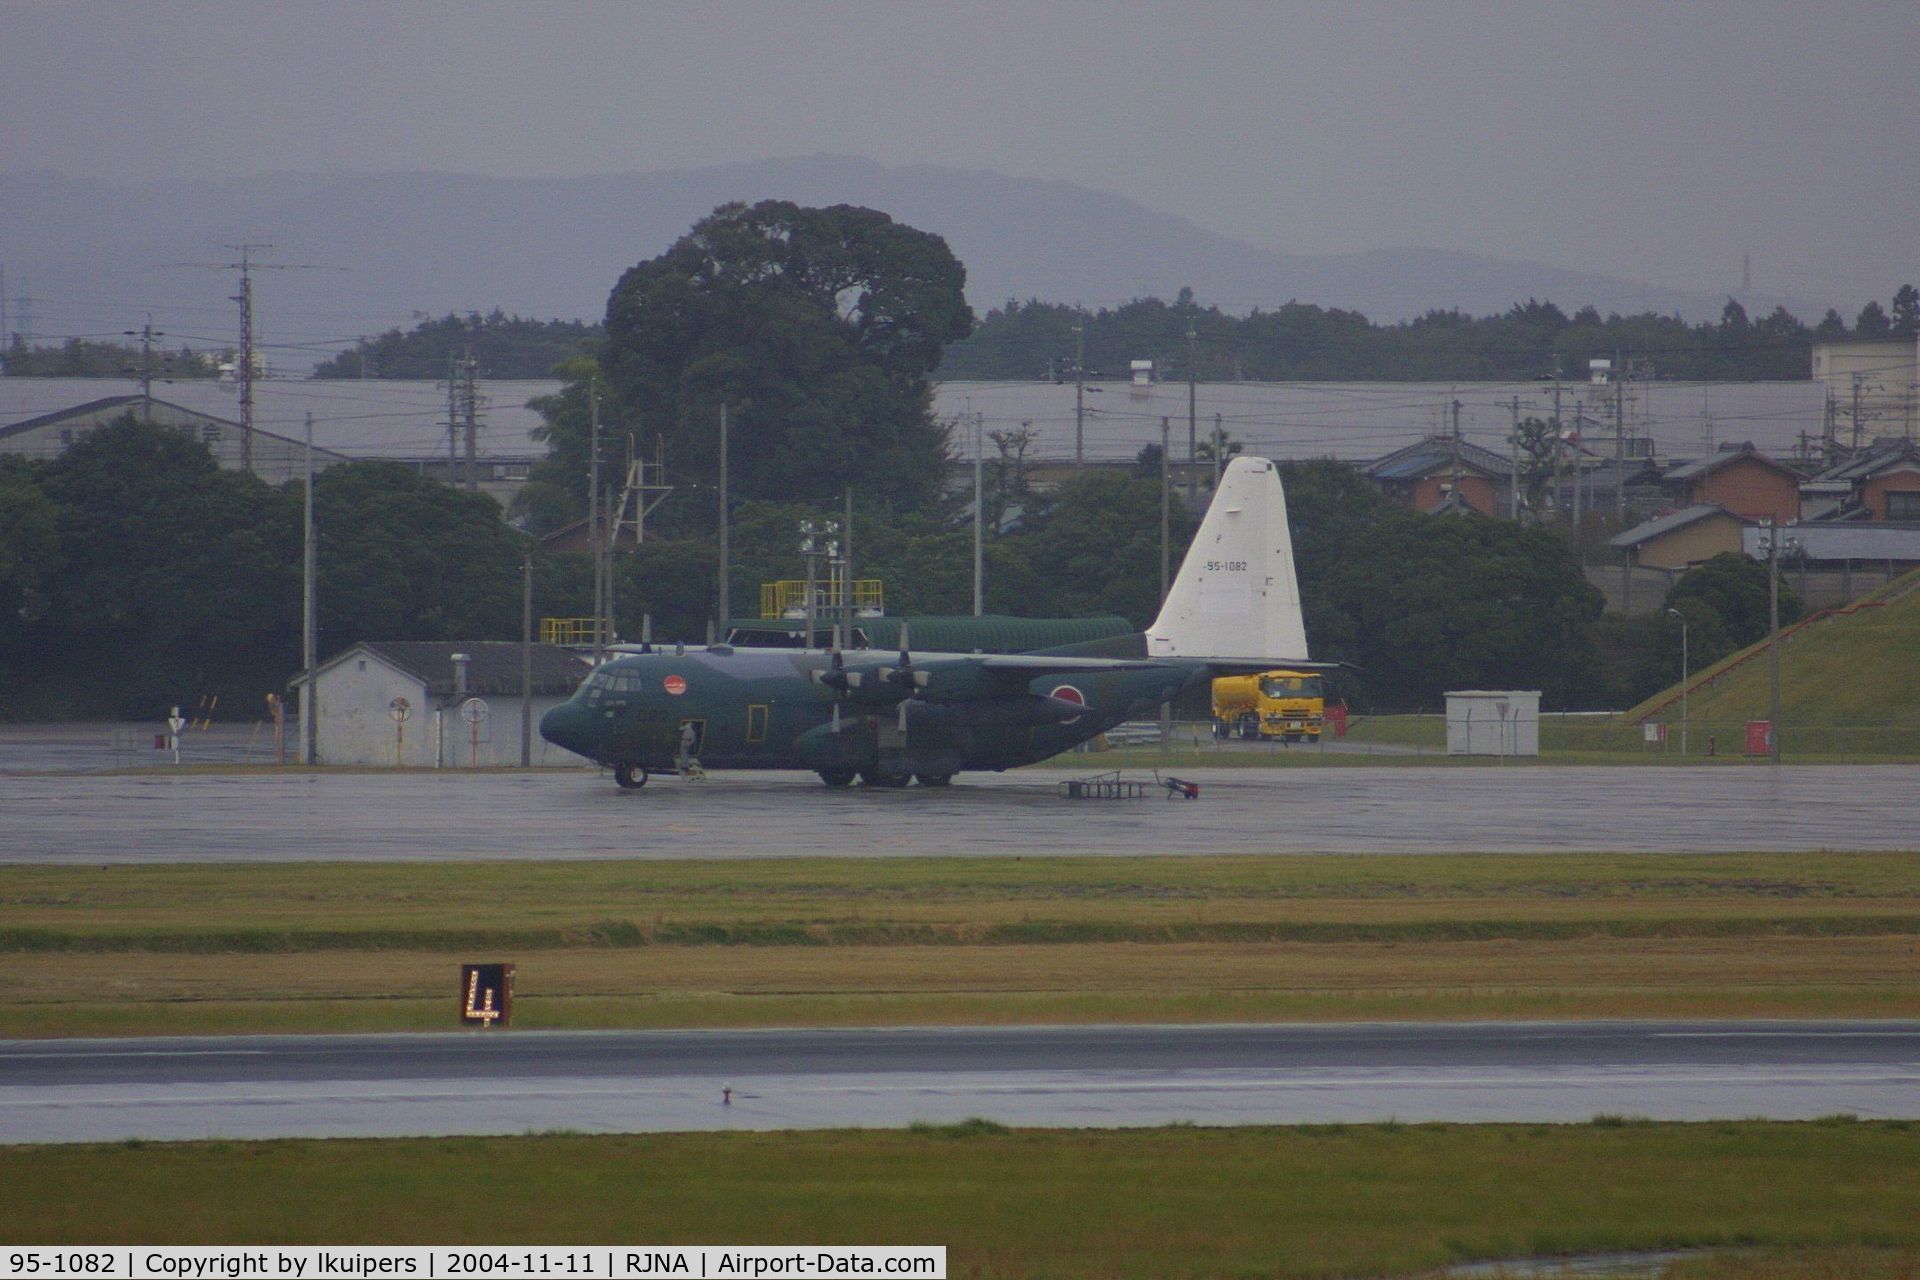 95-1082, 1988 Lockheed C-130H Hercules C/N 382-5171, This Hercules is based at Nagoya Komaki Airport